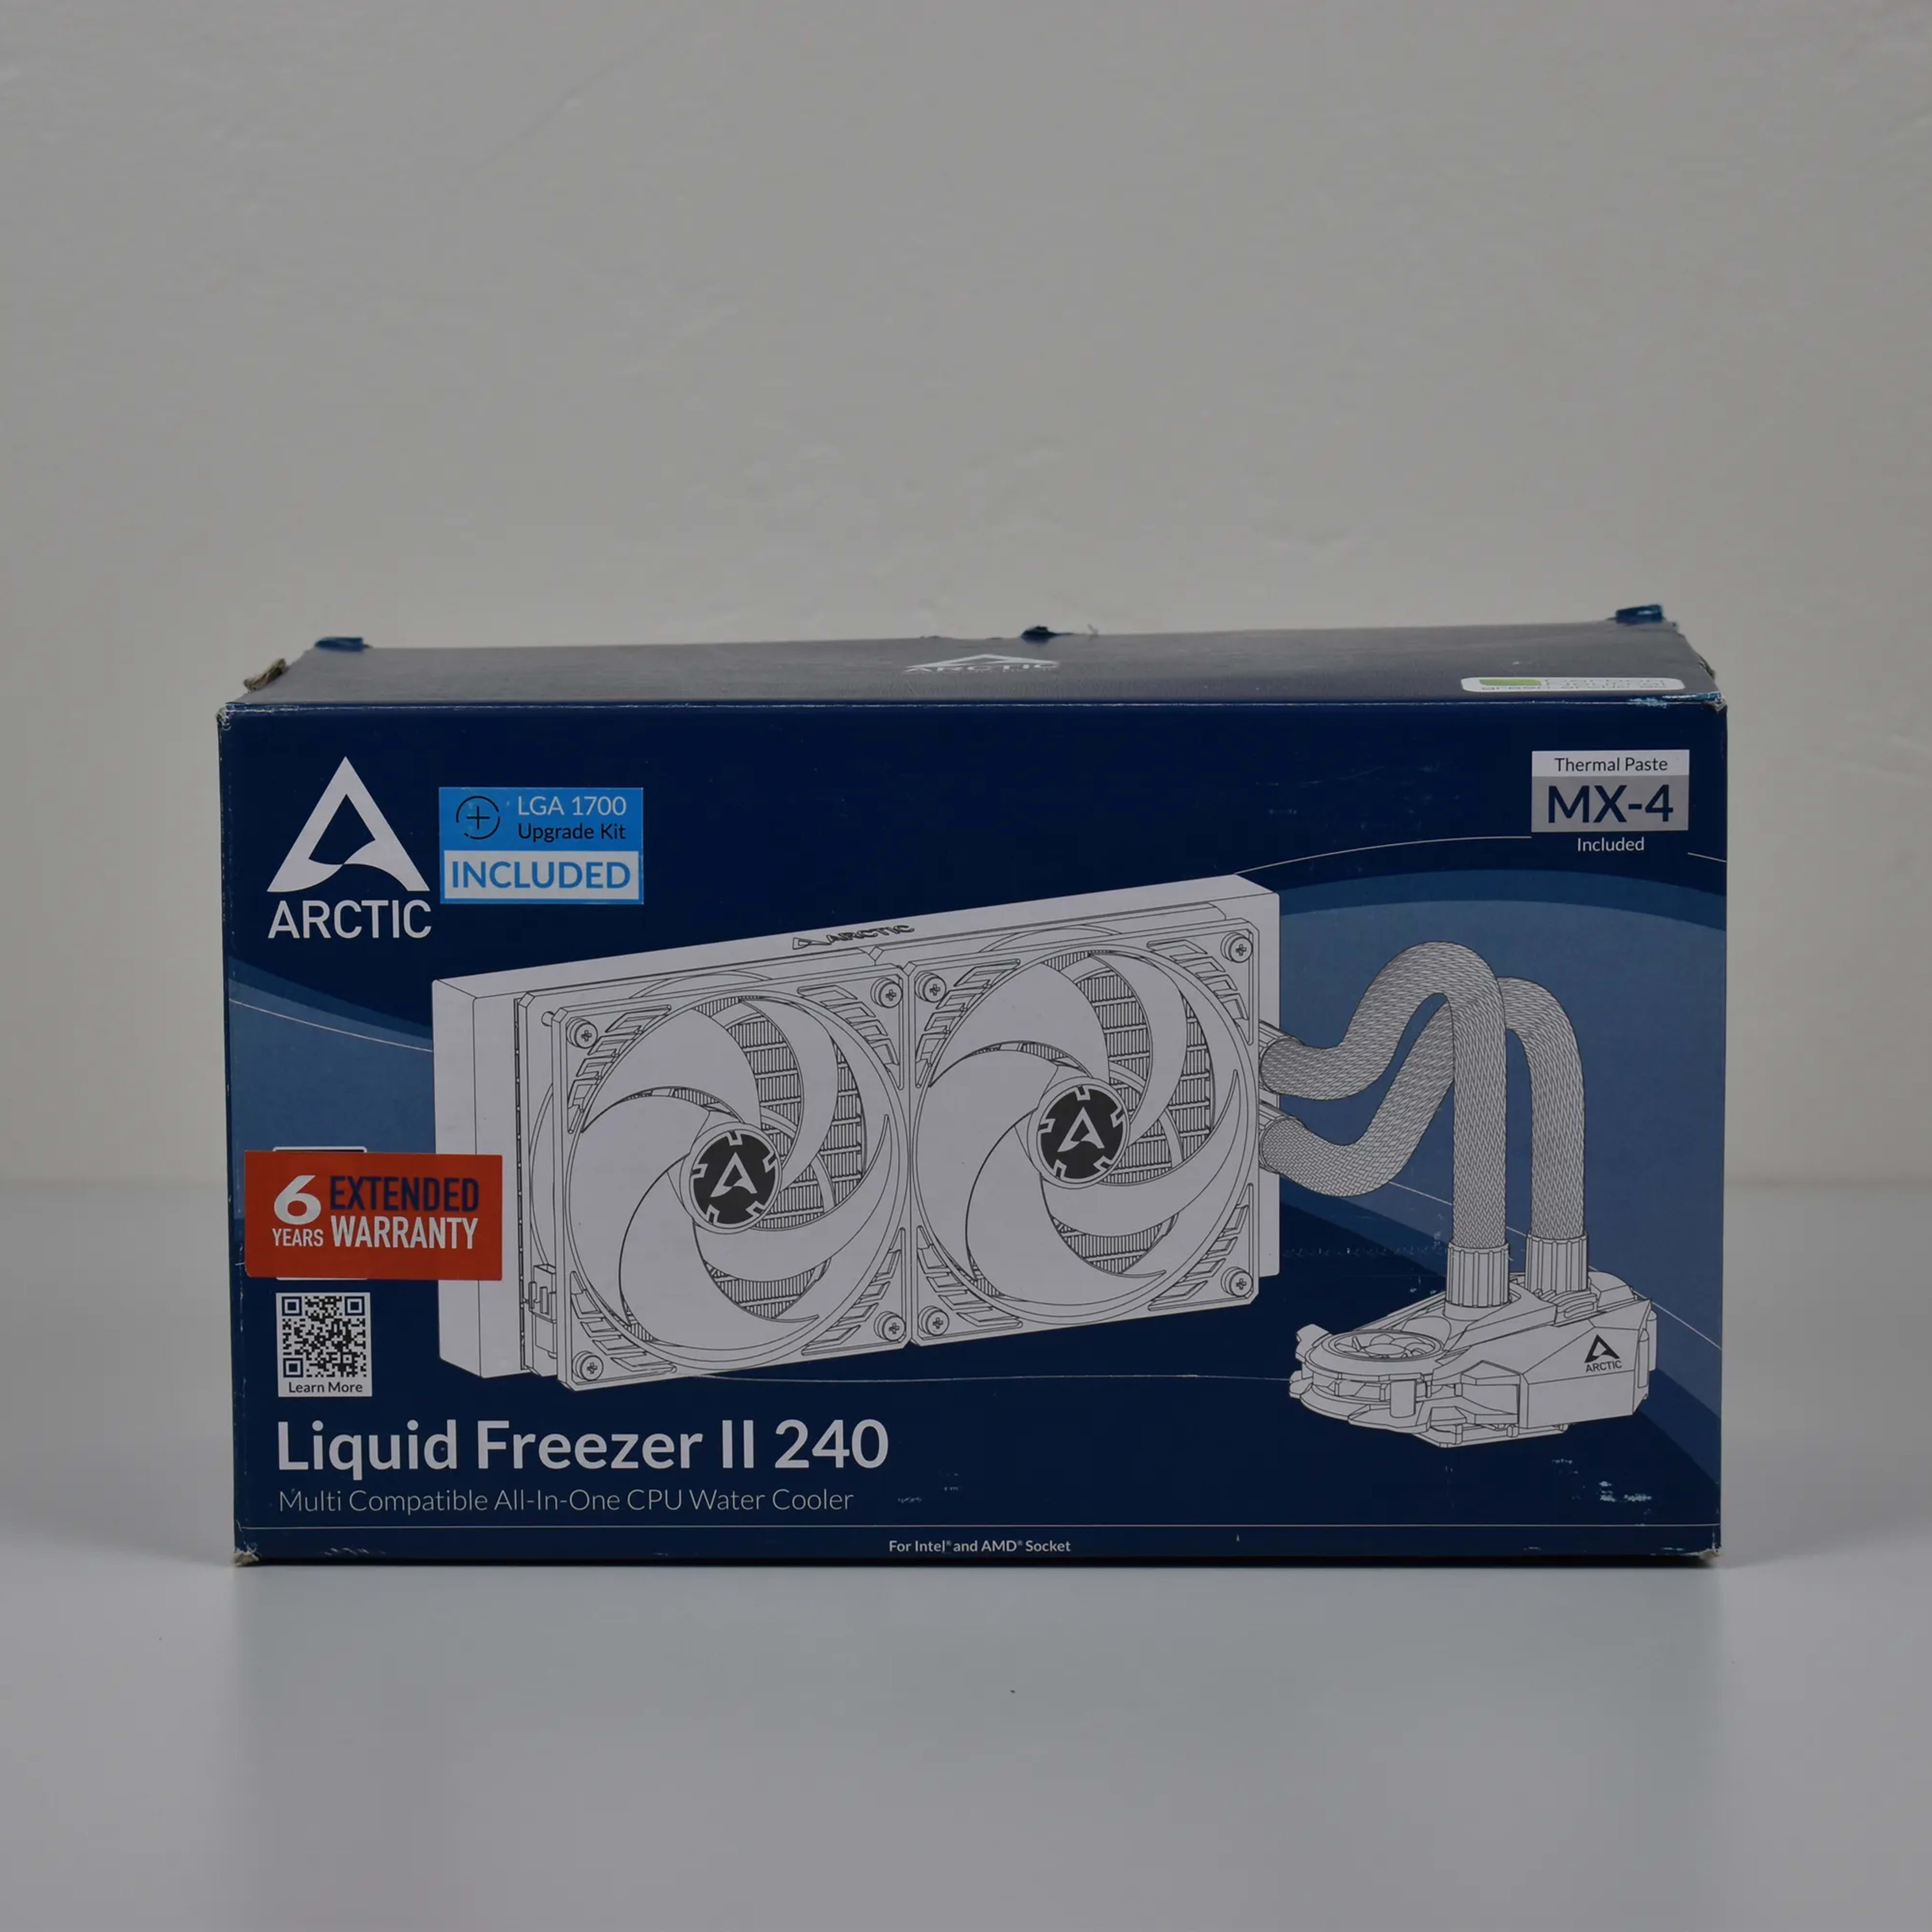 PR, Extended Warranty for all Liquid Freezer II